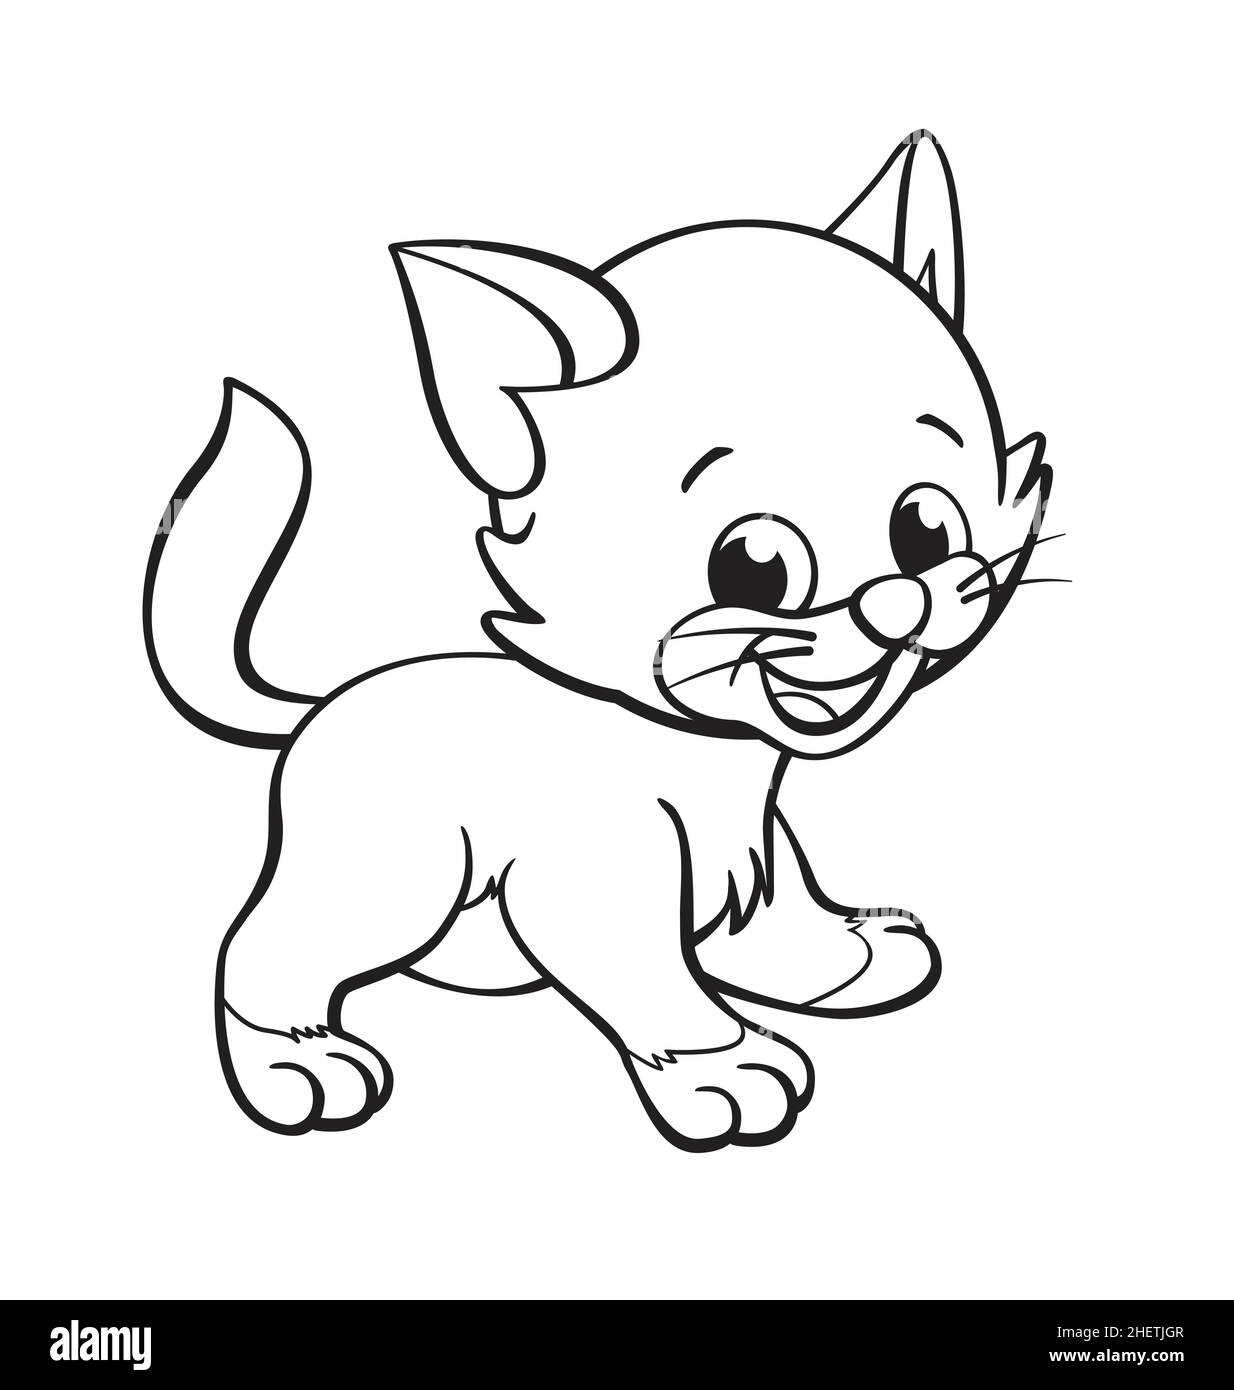 https://c8.alamy.com/comp/2HETJGR/cute-smiling-cartoon-kitten-cat-standing-for-coloring-colouring-in-activity-book-image-vector-isolated-on-white-background-2HETJGR.jpg